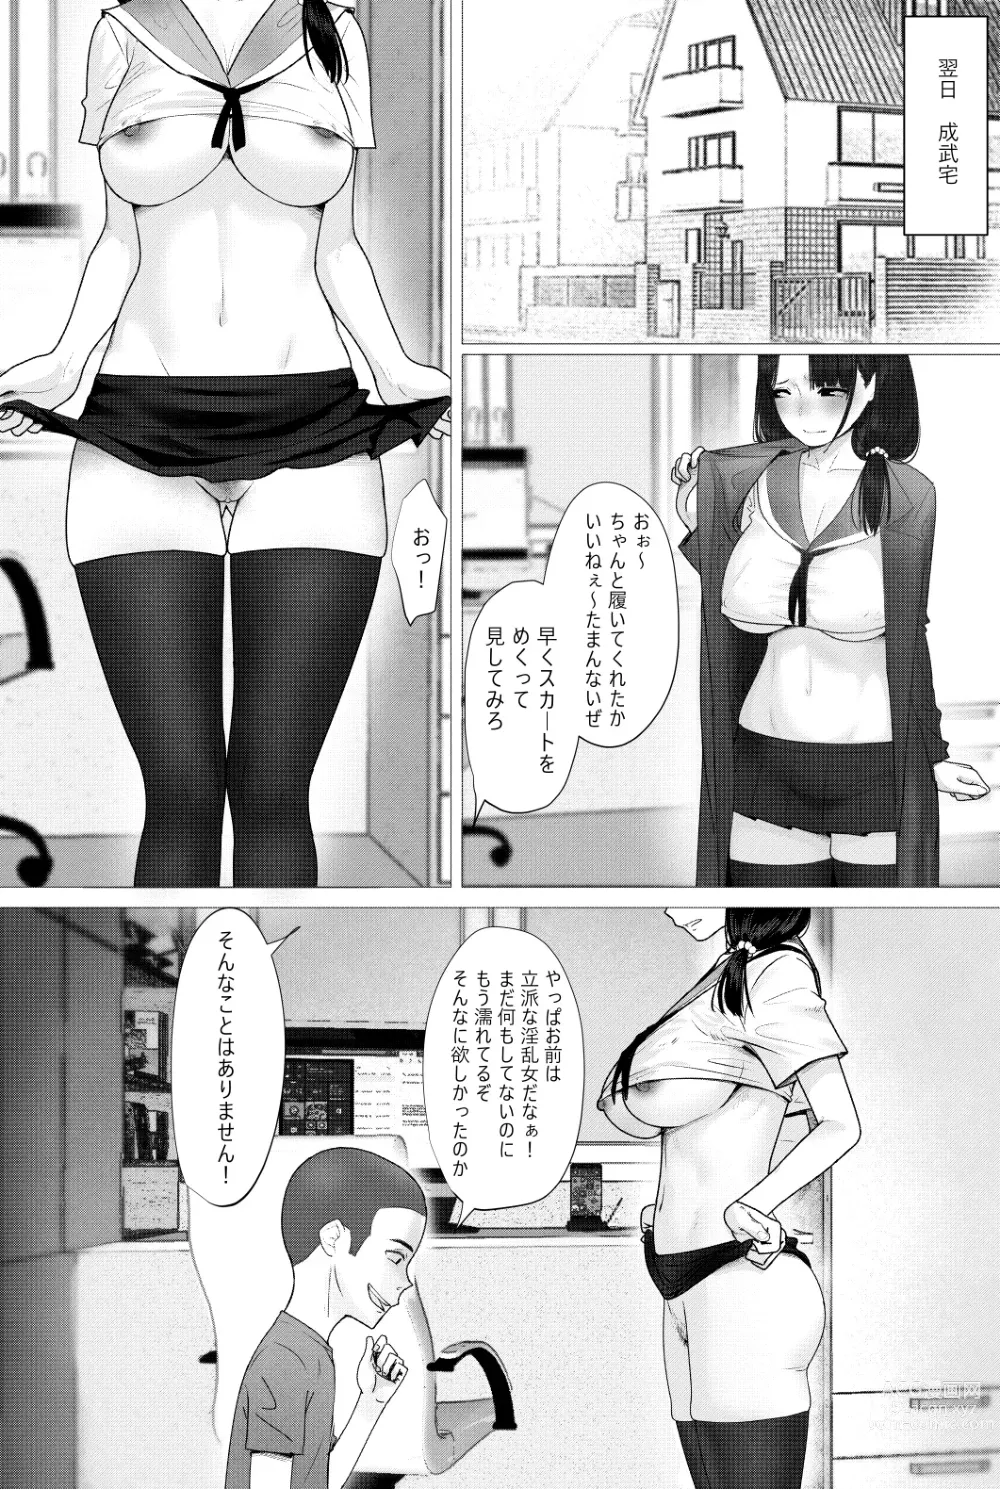 Page 69 of doujinshi Warugaki Series